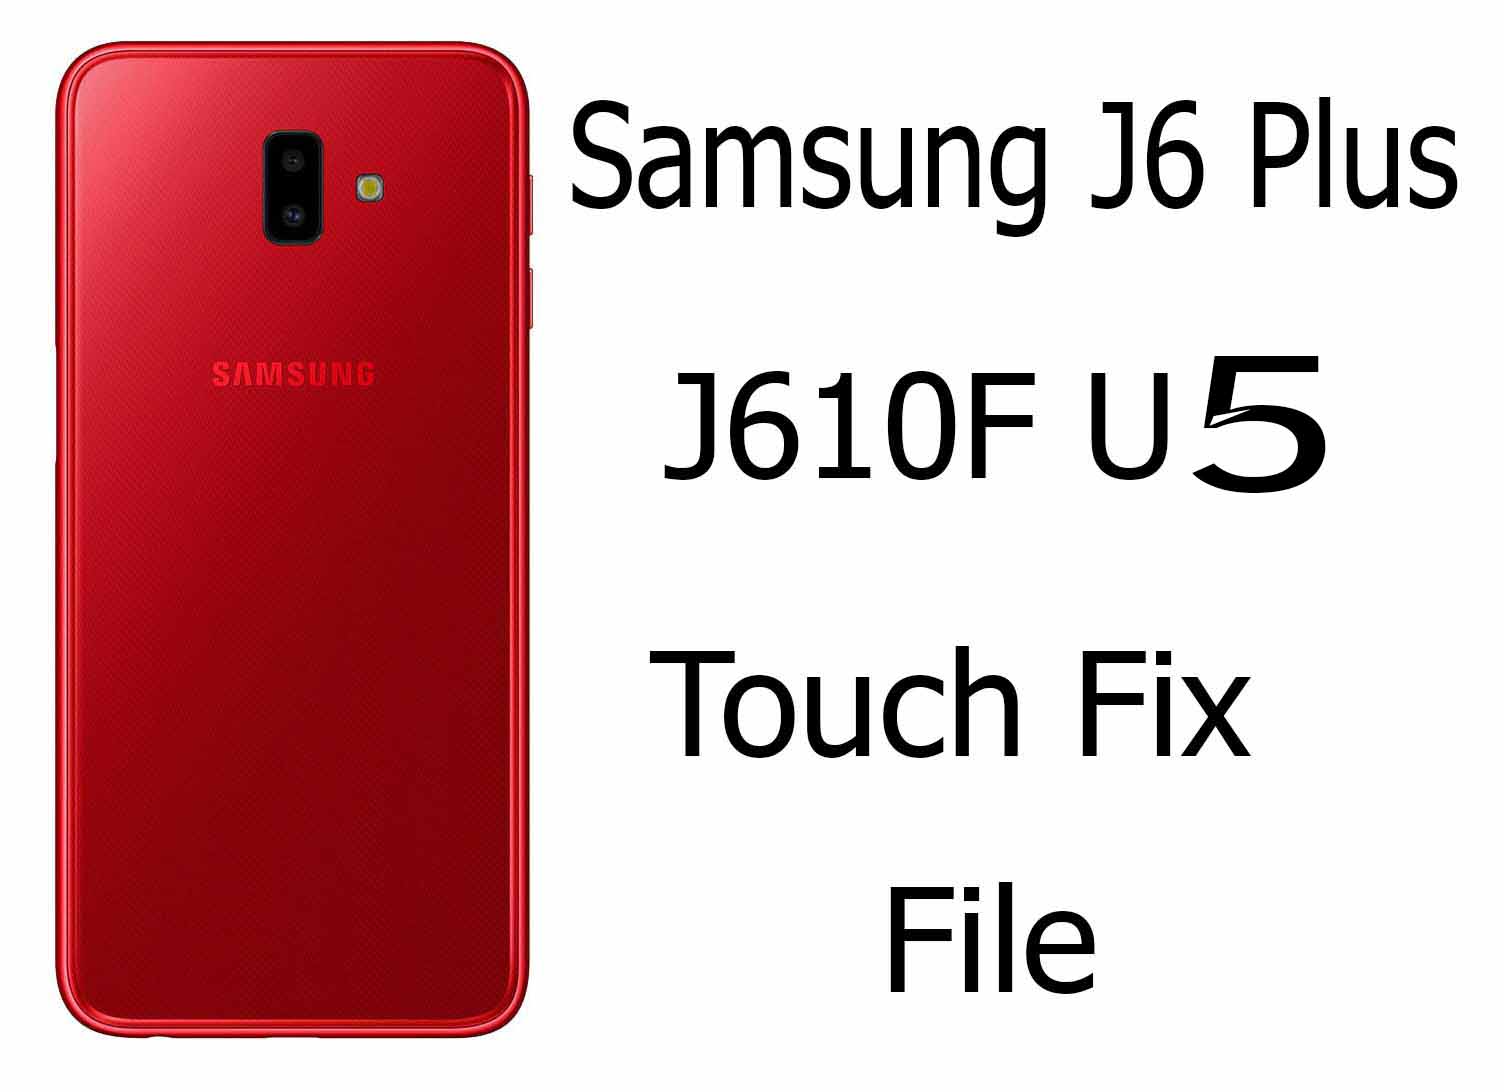 Samsung J6 Plus J610F U5 Touch Fix File Fix EDL-9008 Mode